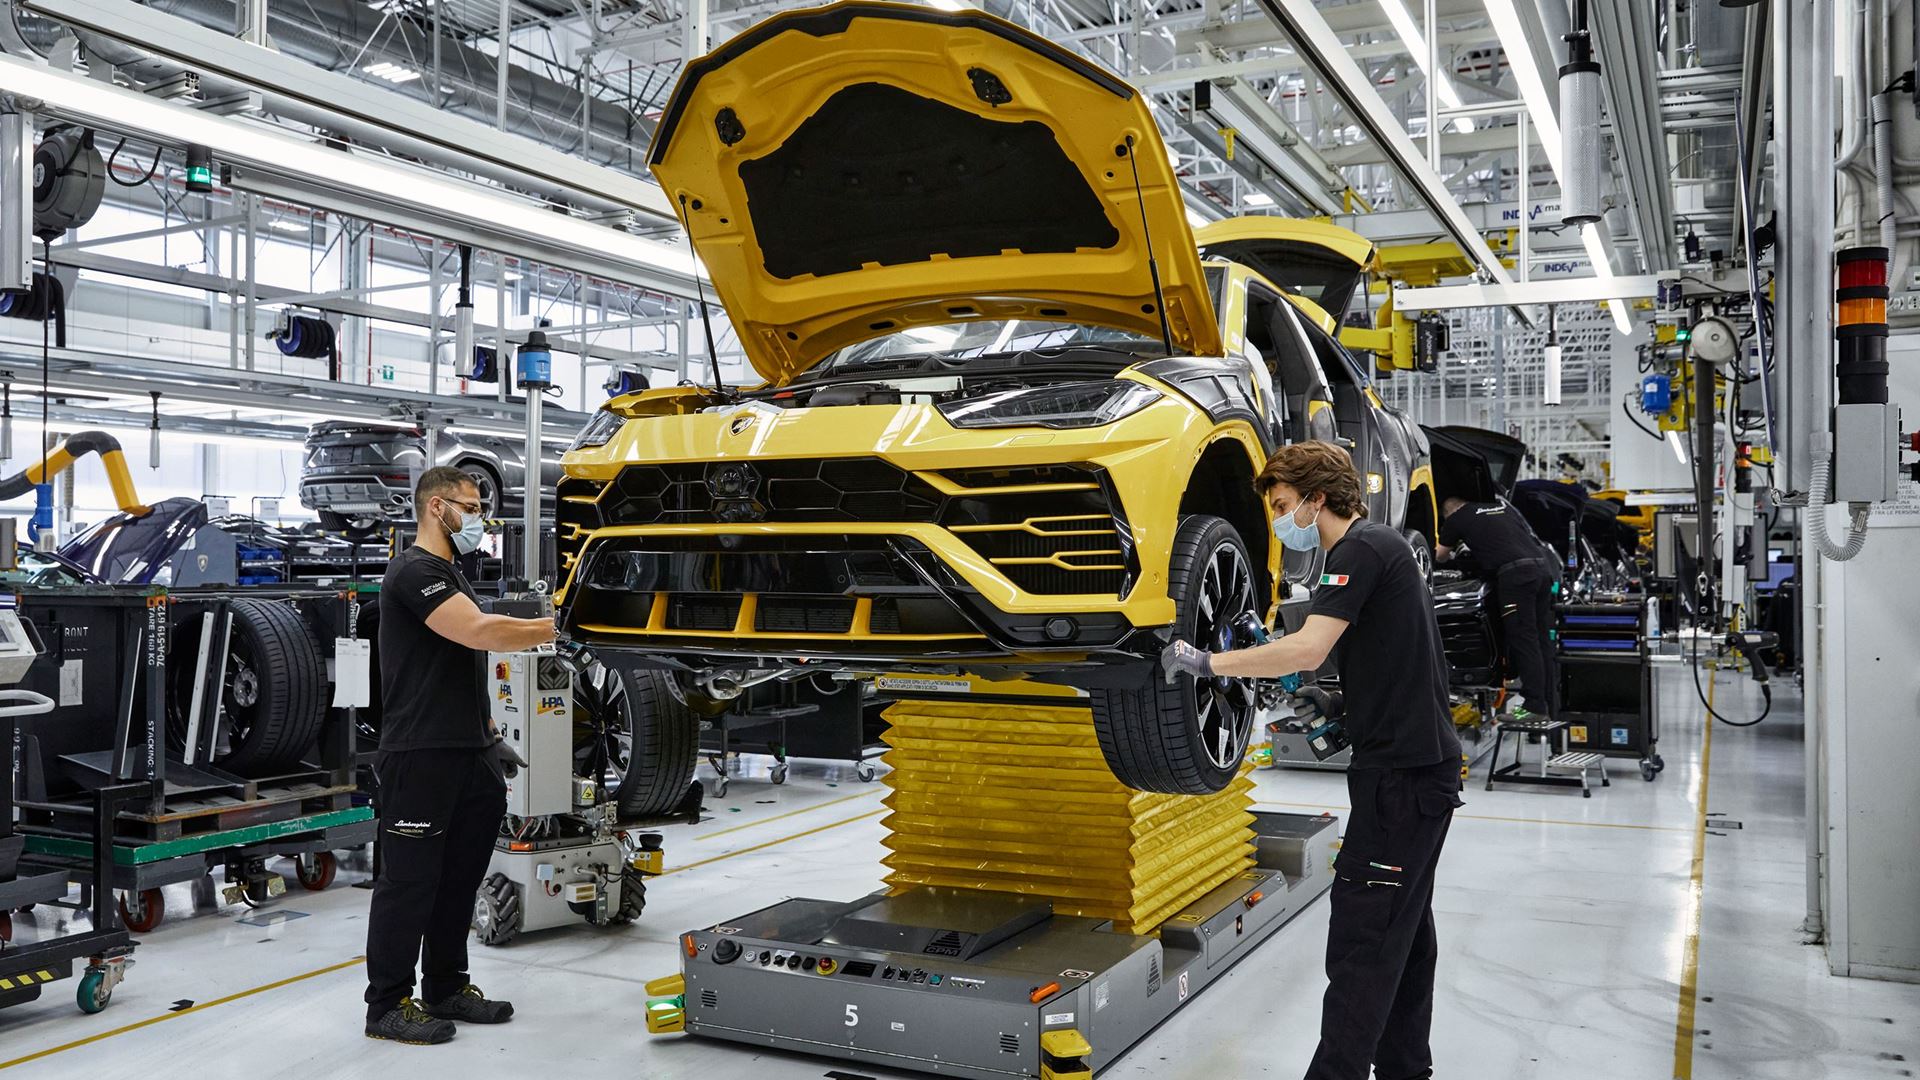 Automobili Lamborghini earns “Top Employer Italy 2021” certification